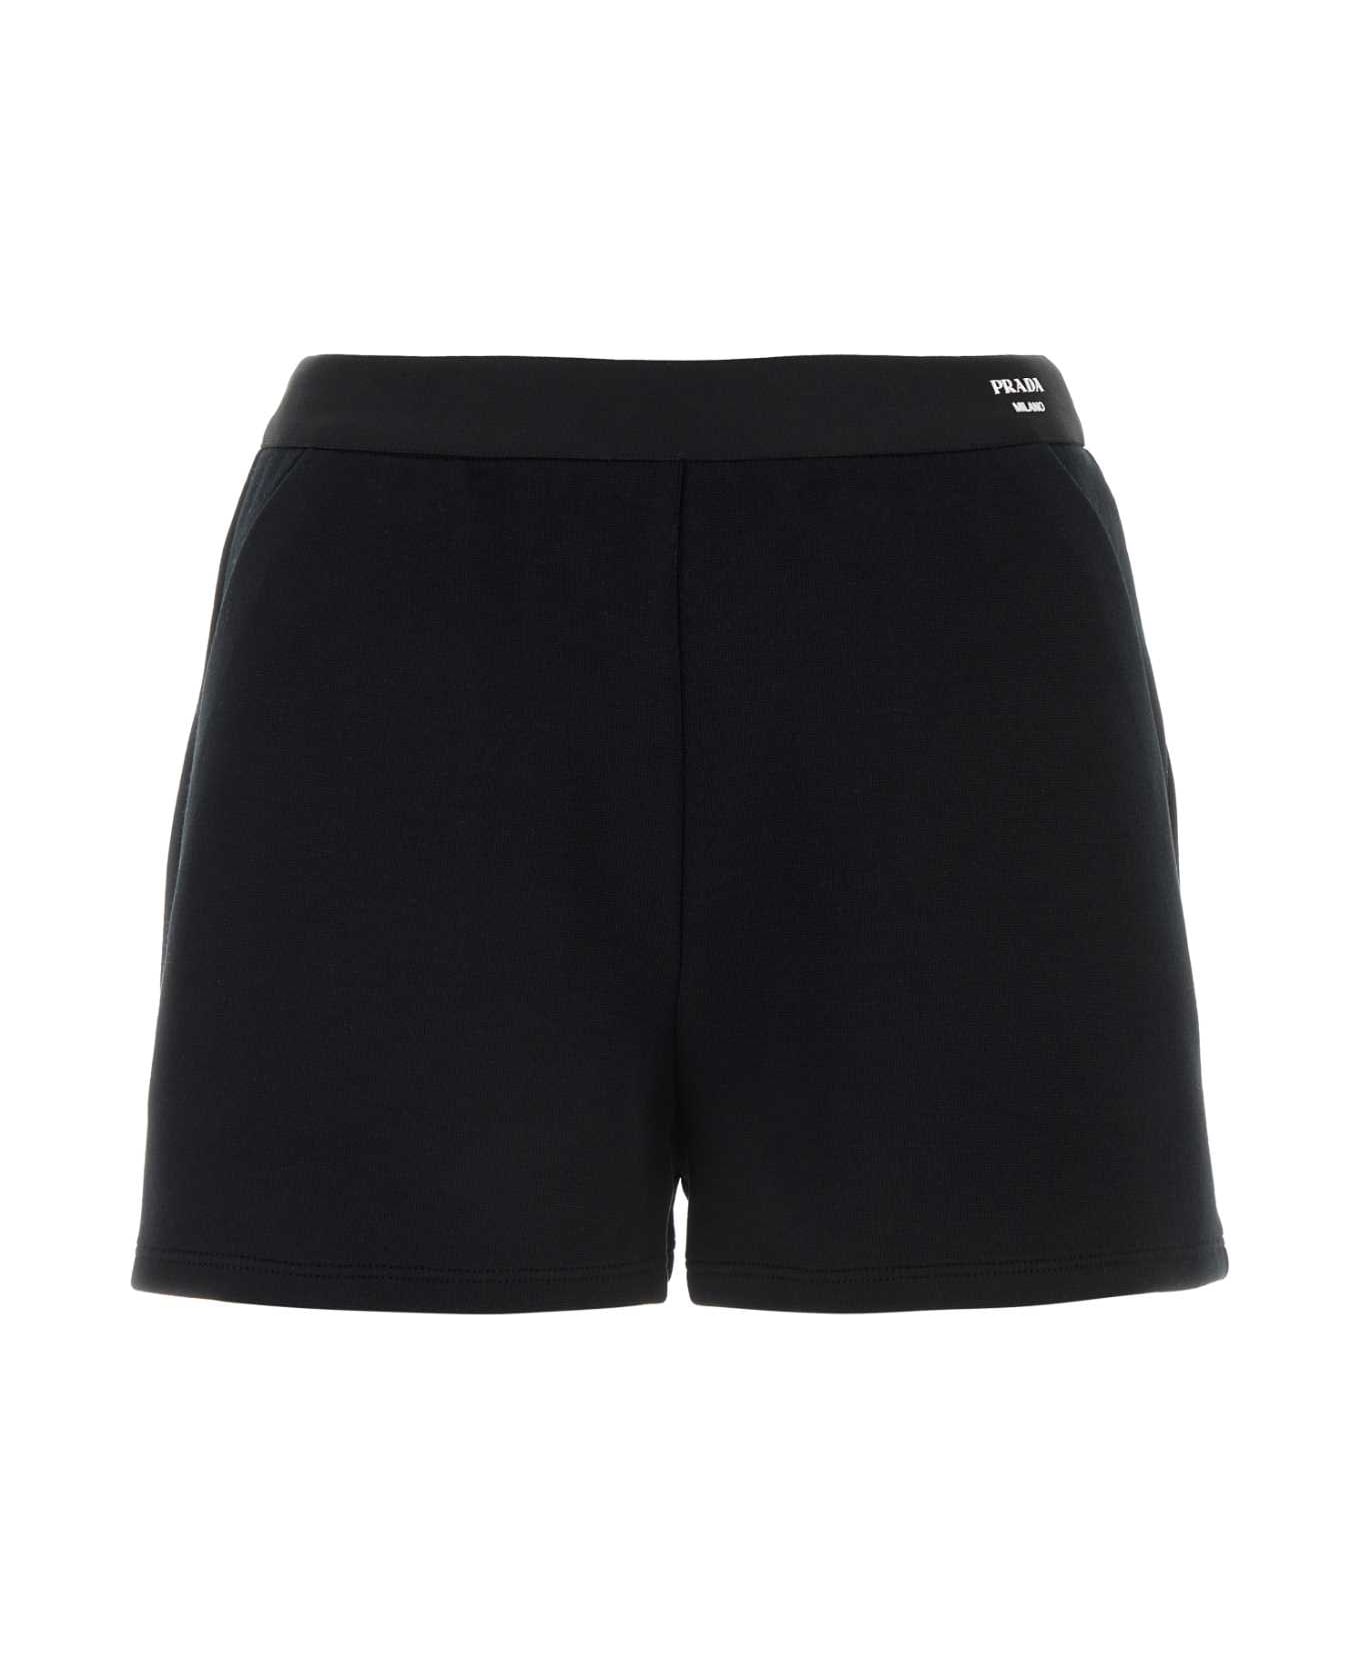 Prada Black Stretch Cotton Blend Shorts - NERO